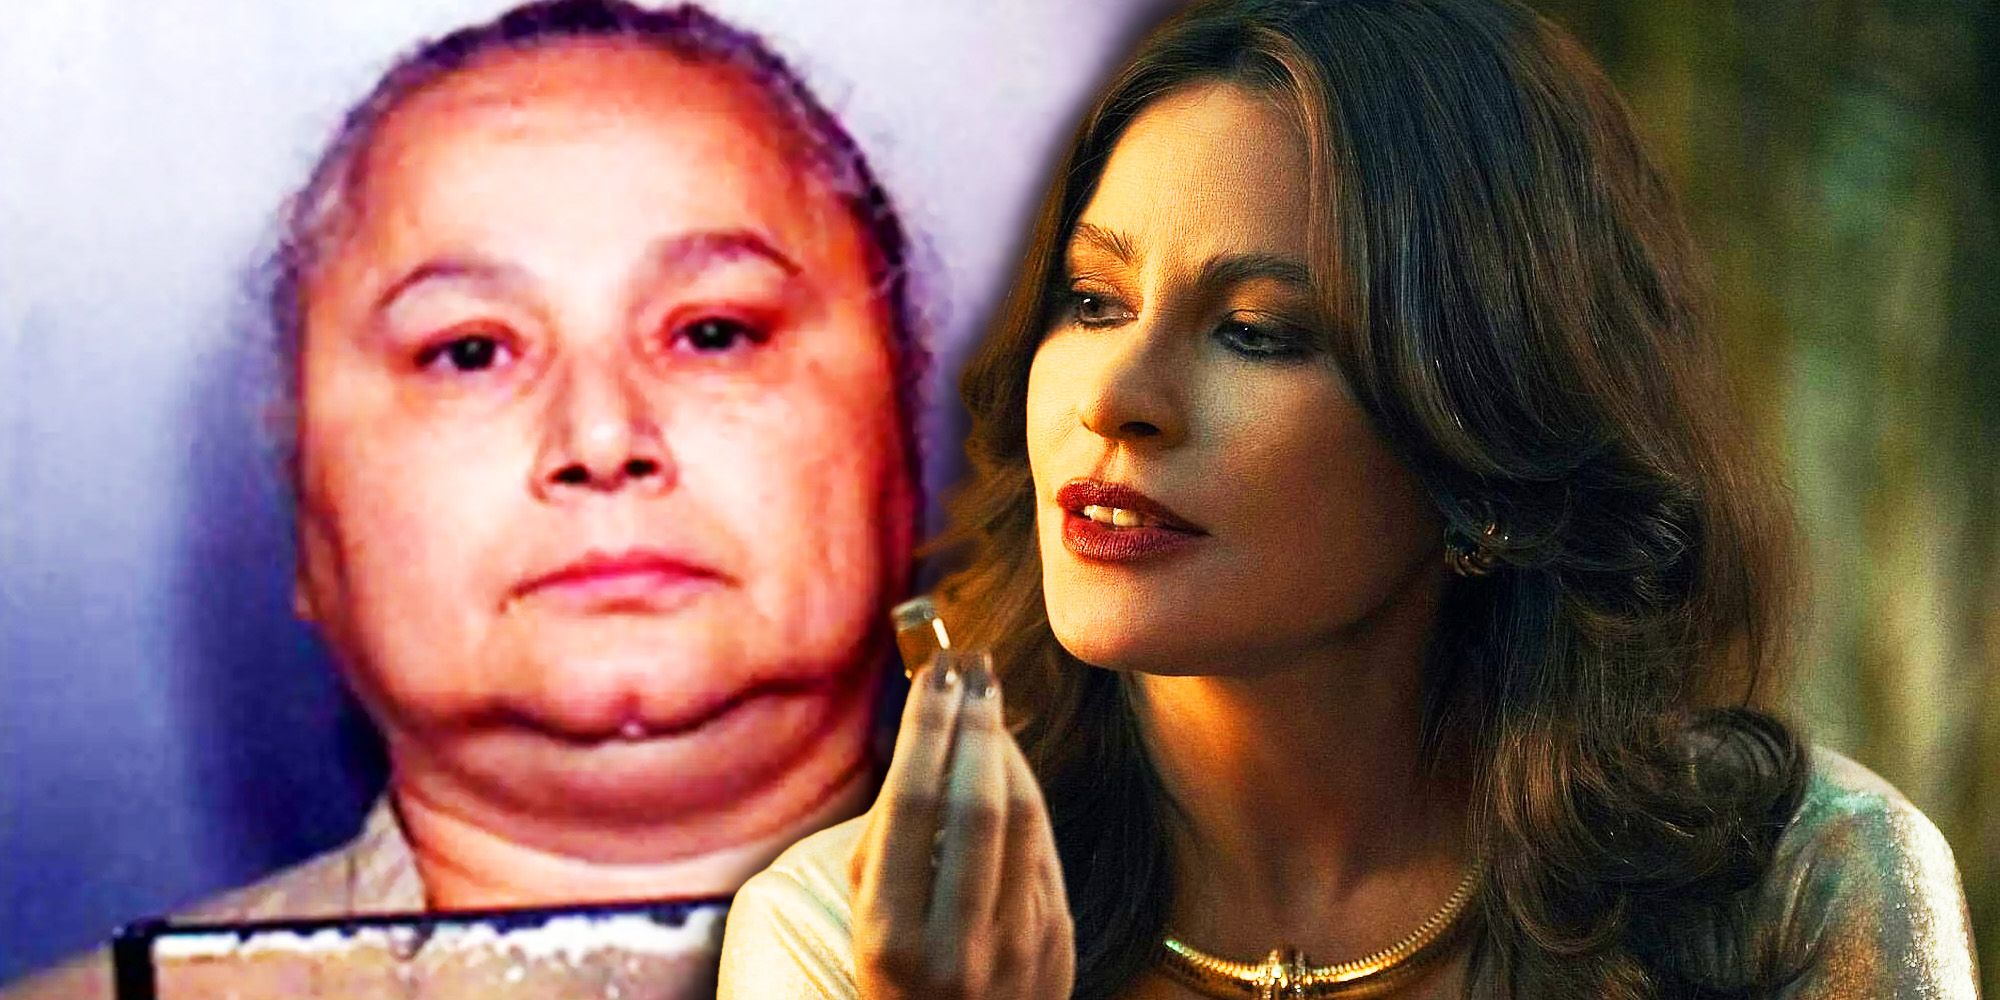 Sofia Vergara Clarifies She Did 'Fake' Drugs In 'Griselda